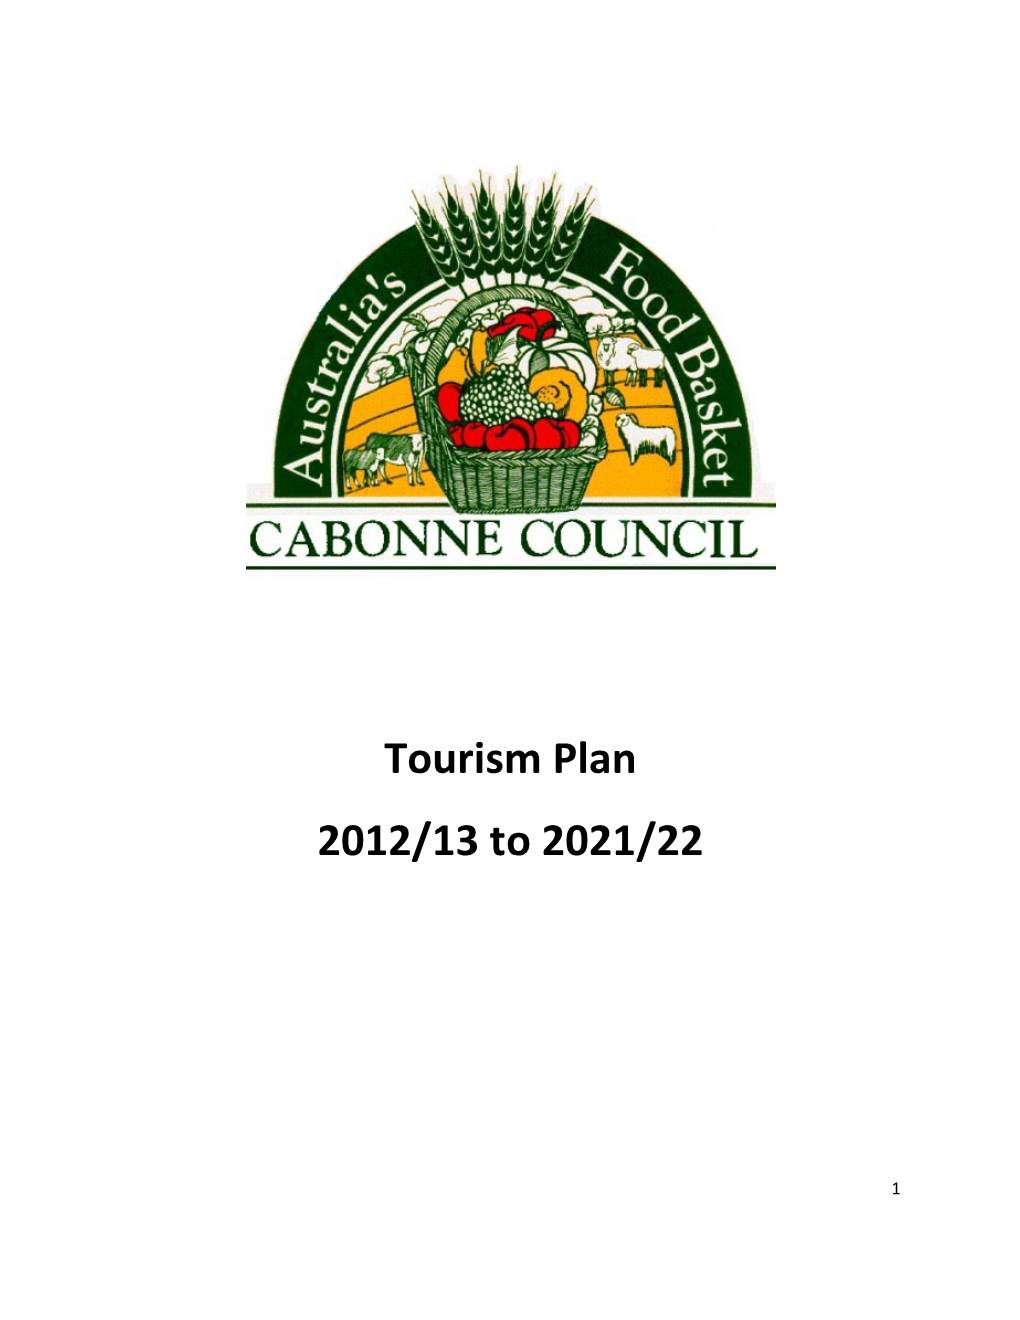 Tourism Plan 2012/13 to 2021/22